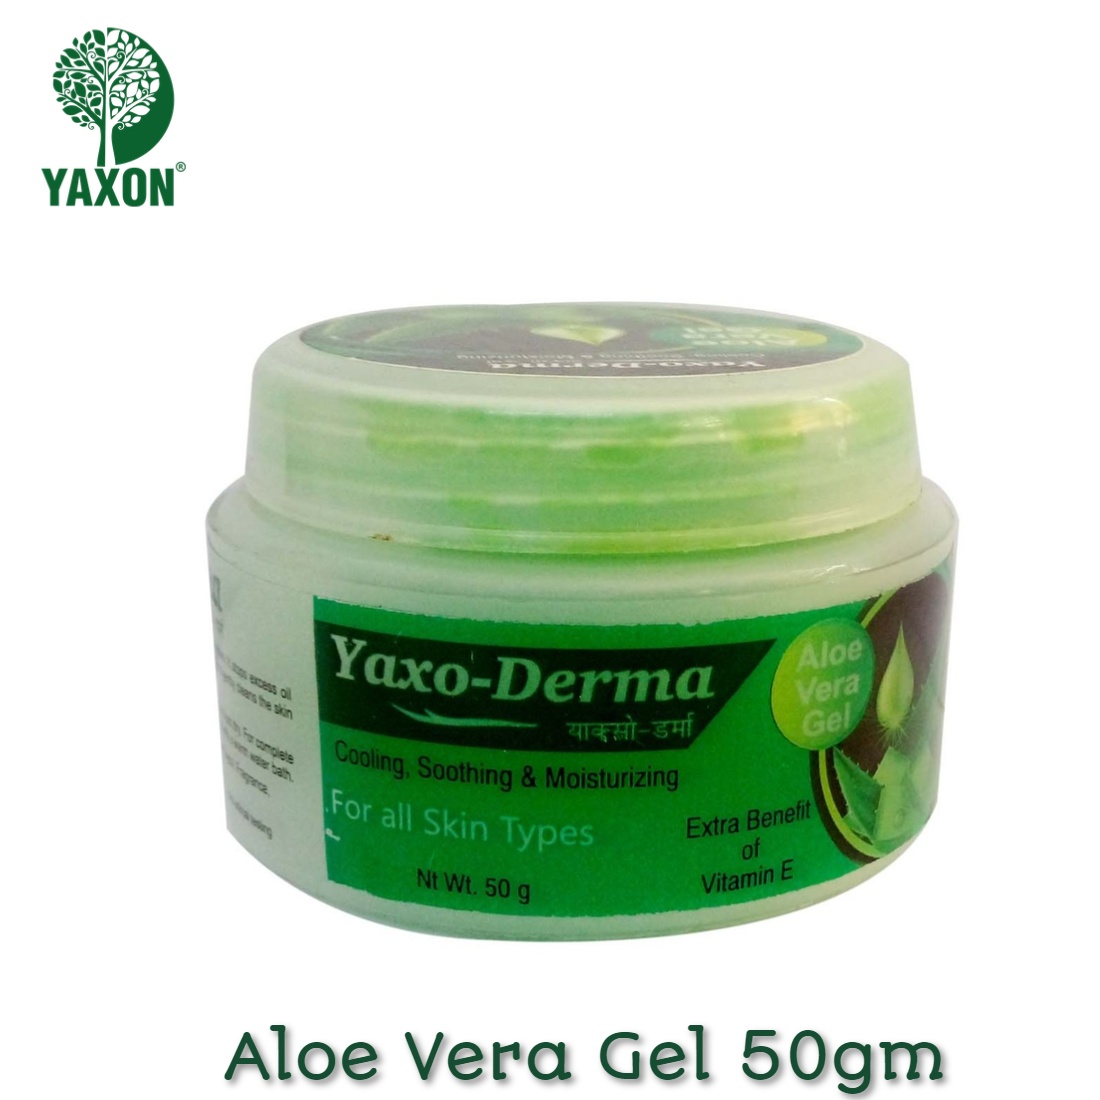 YAXO DERMA Aloe Vera Gel 50gm